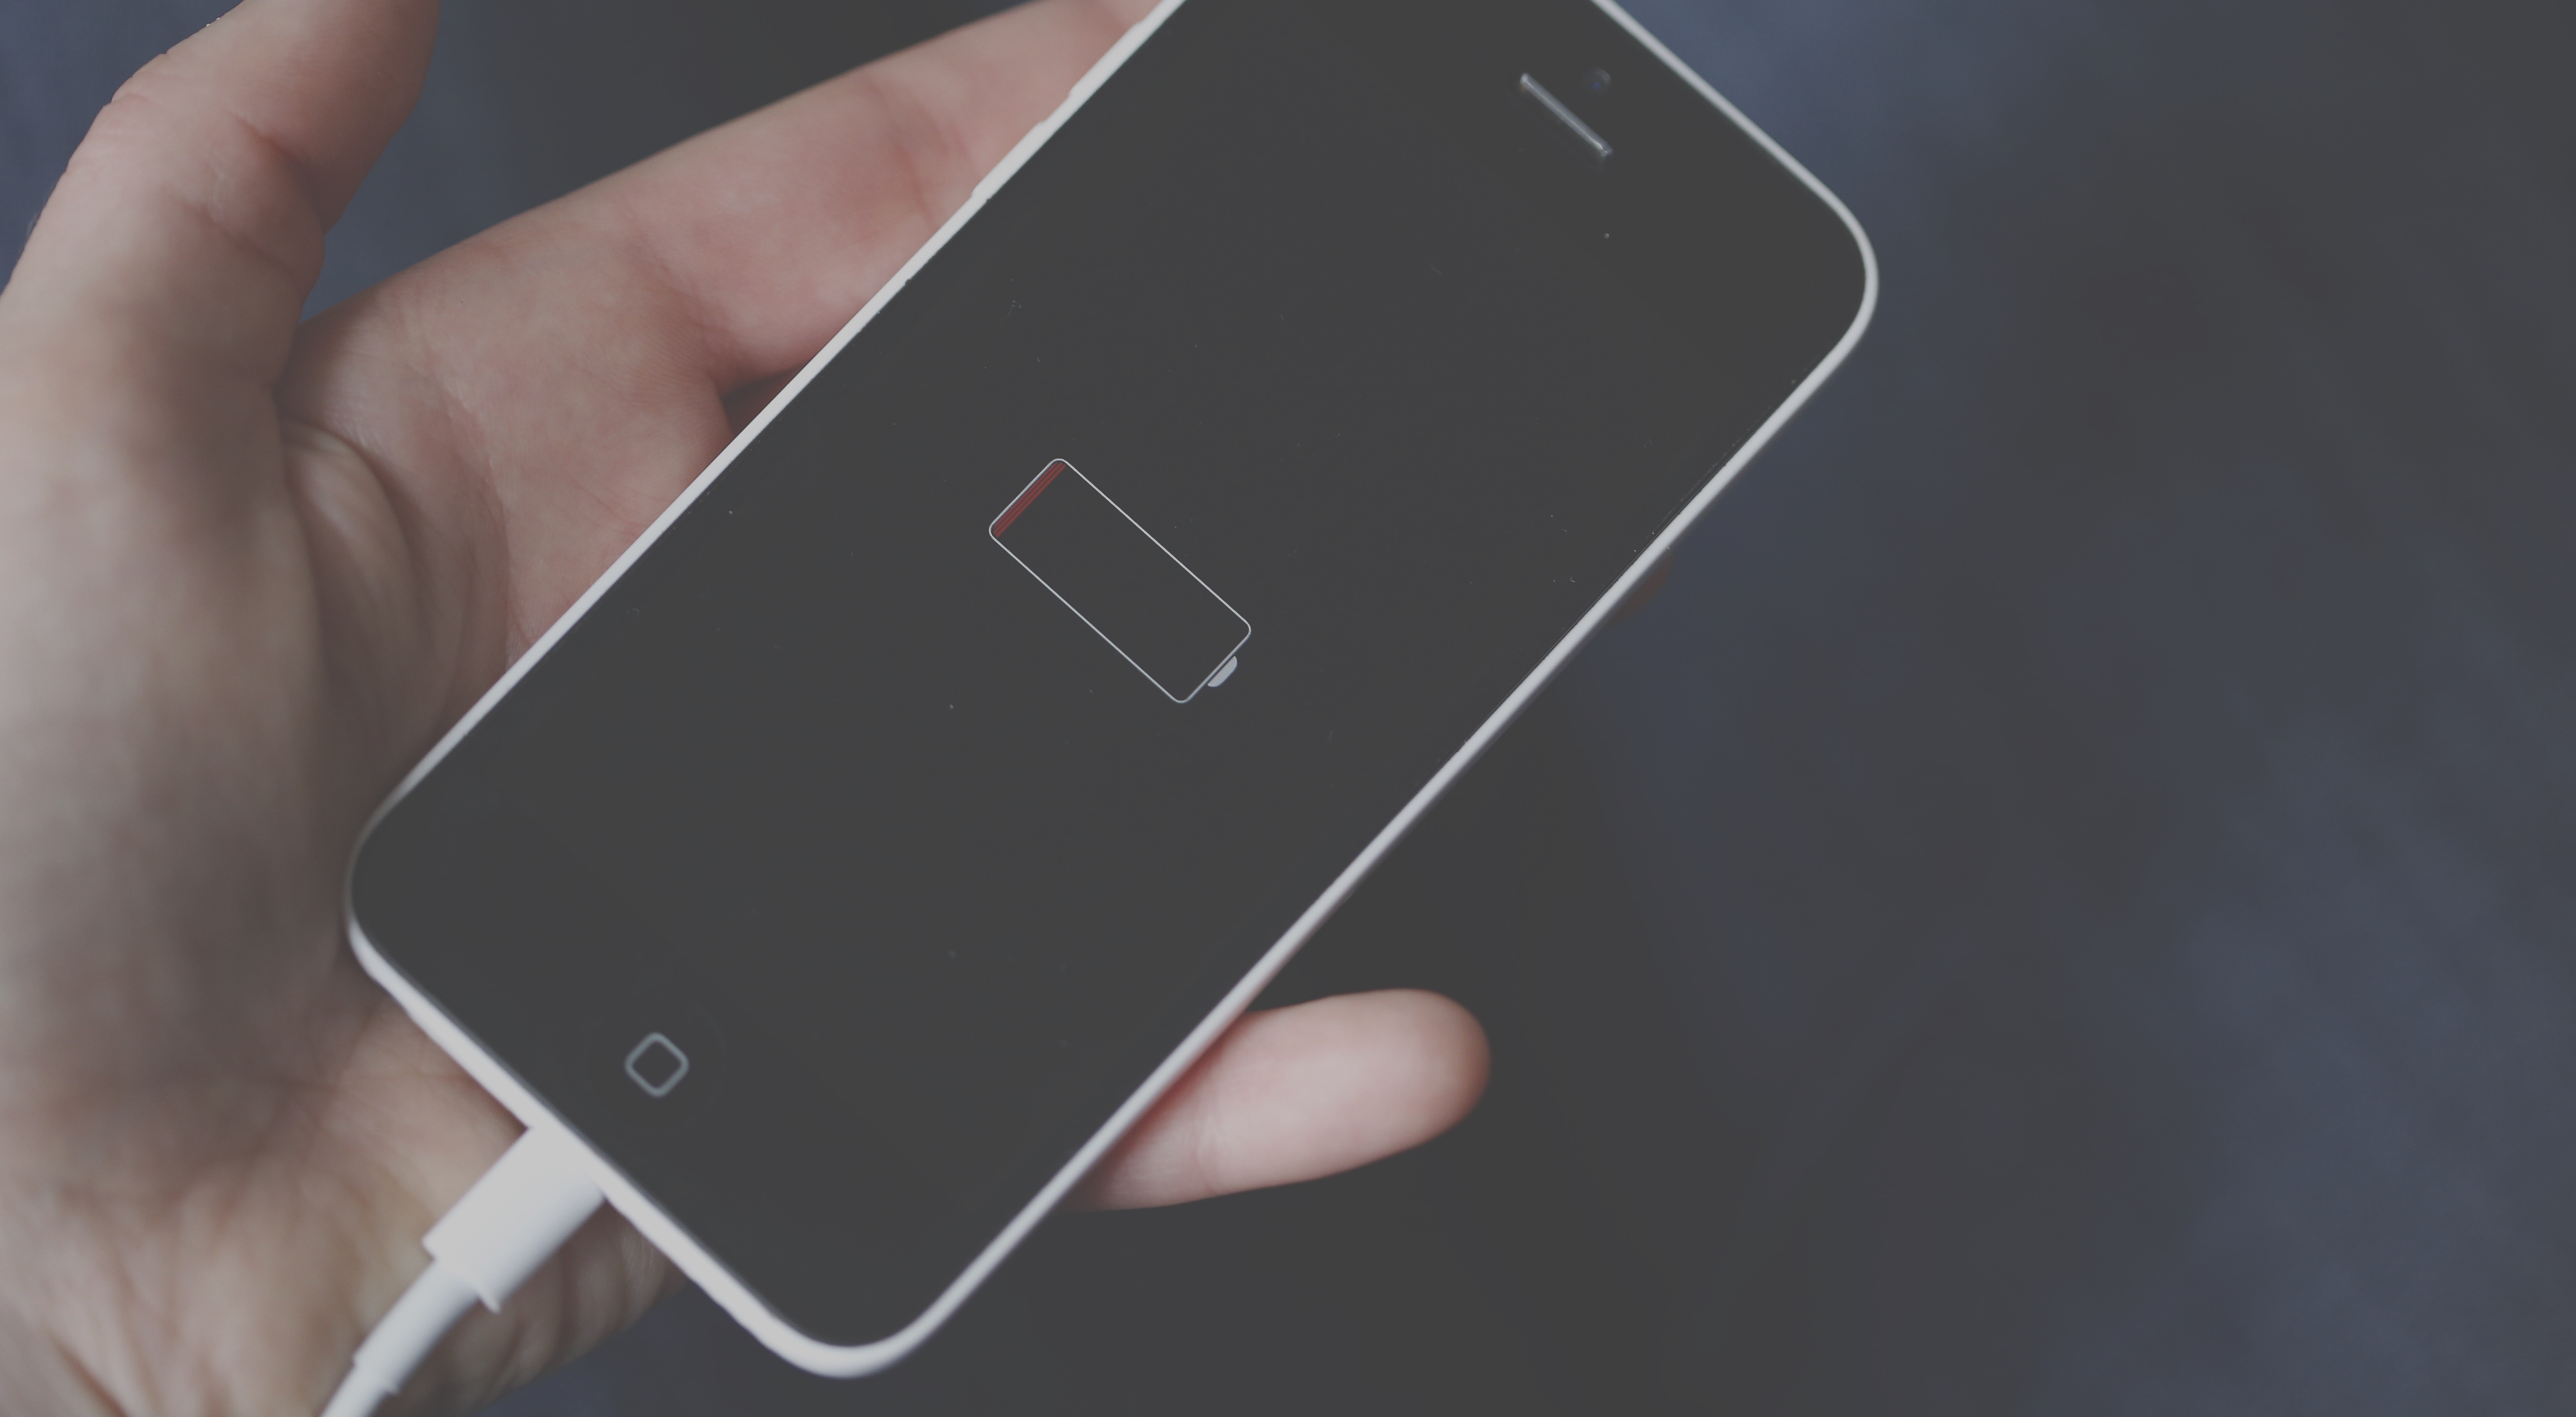 iphone battery dies fast